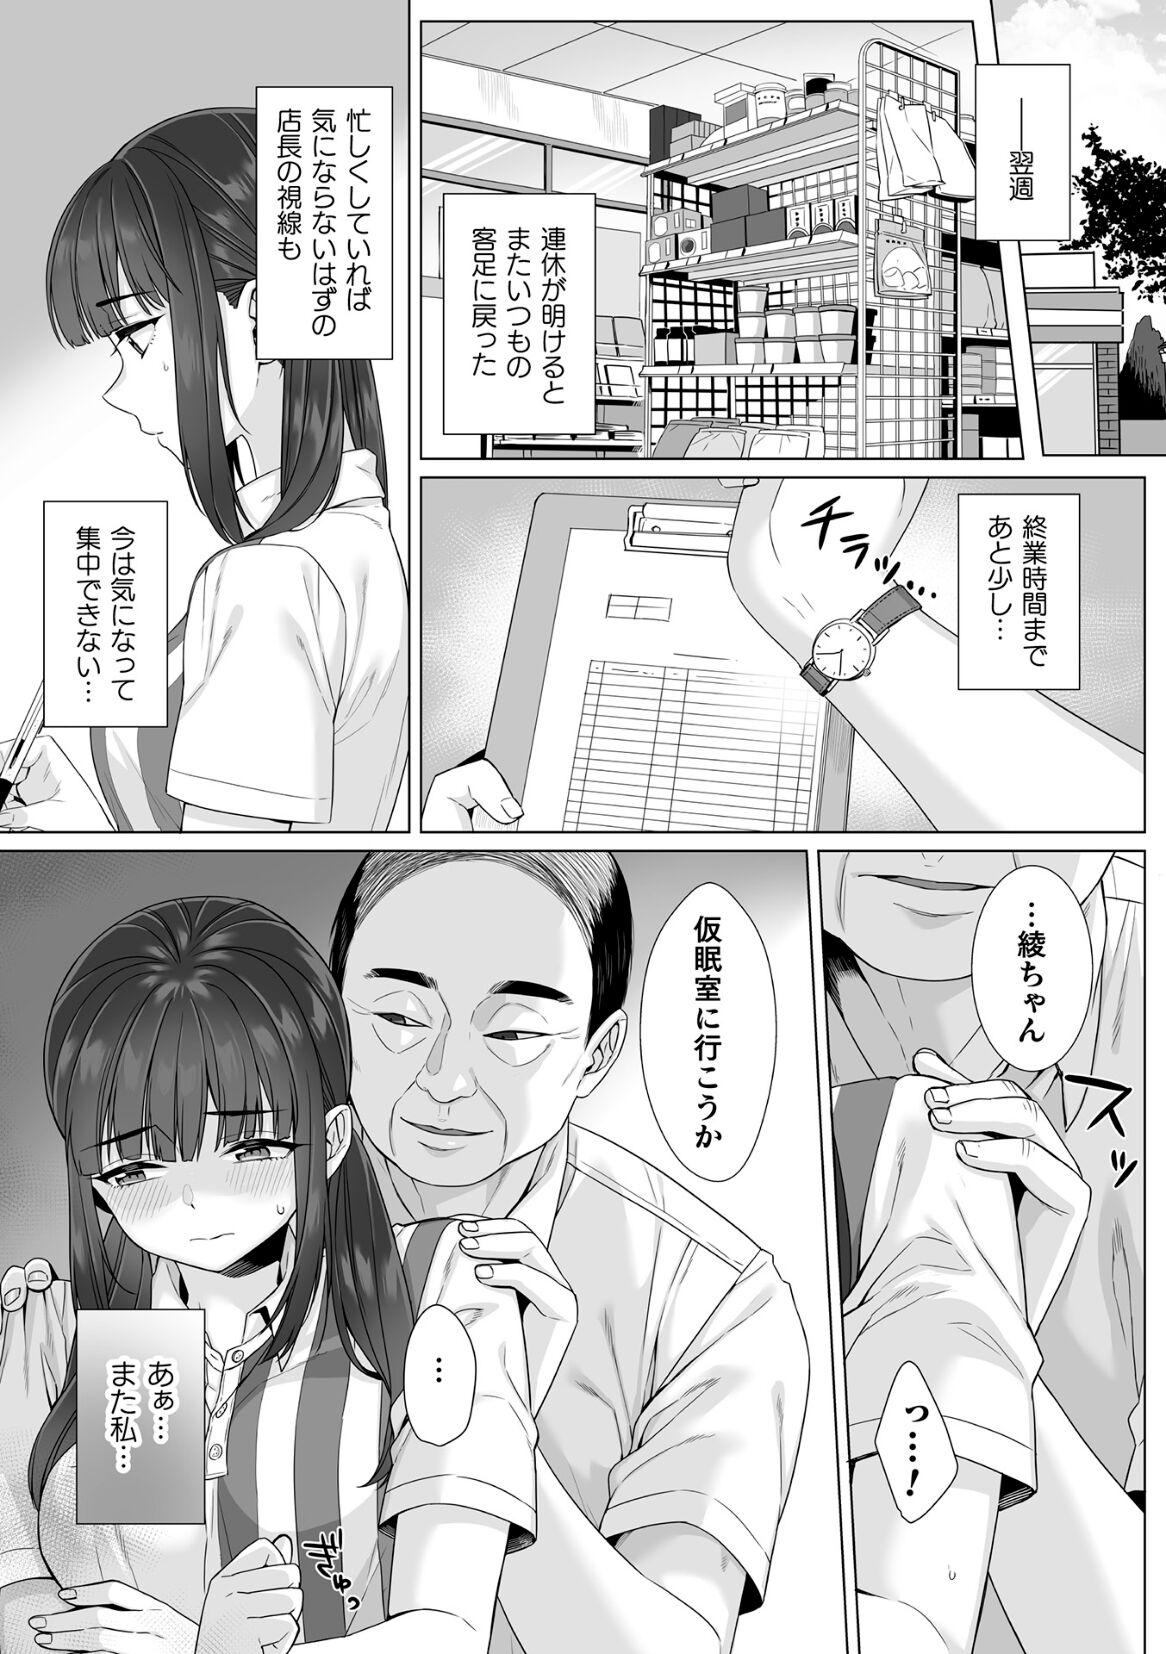 Dirty Talk Junboku Joshikousei wa Oyaji Iro ni Somerarete Comic Ban Ch. 4 Spank - Page 5